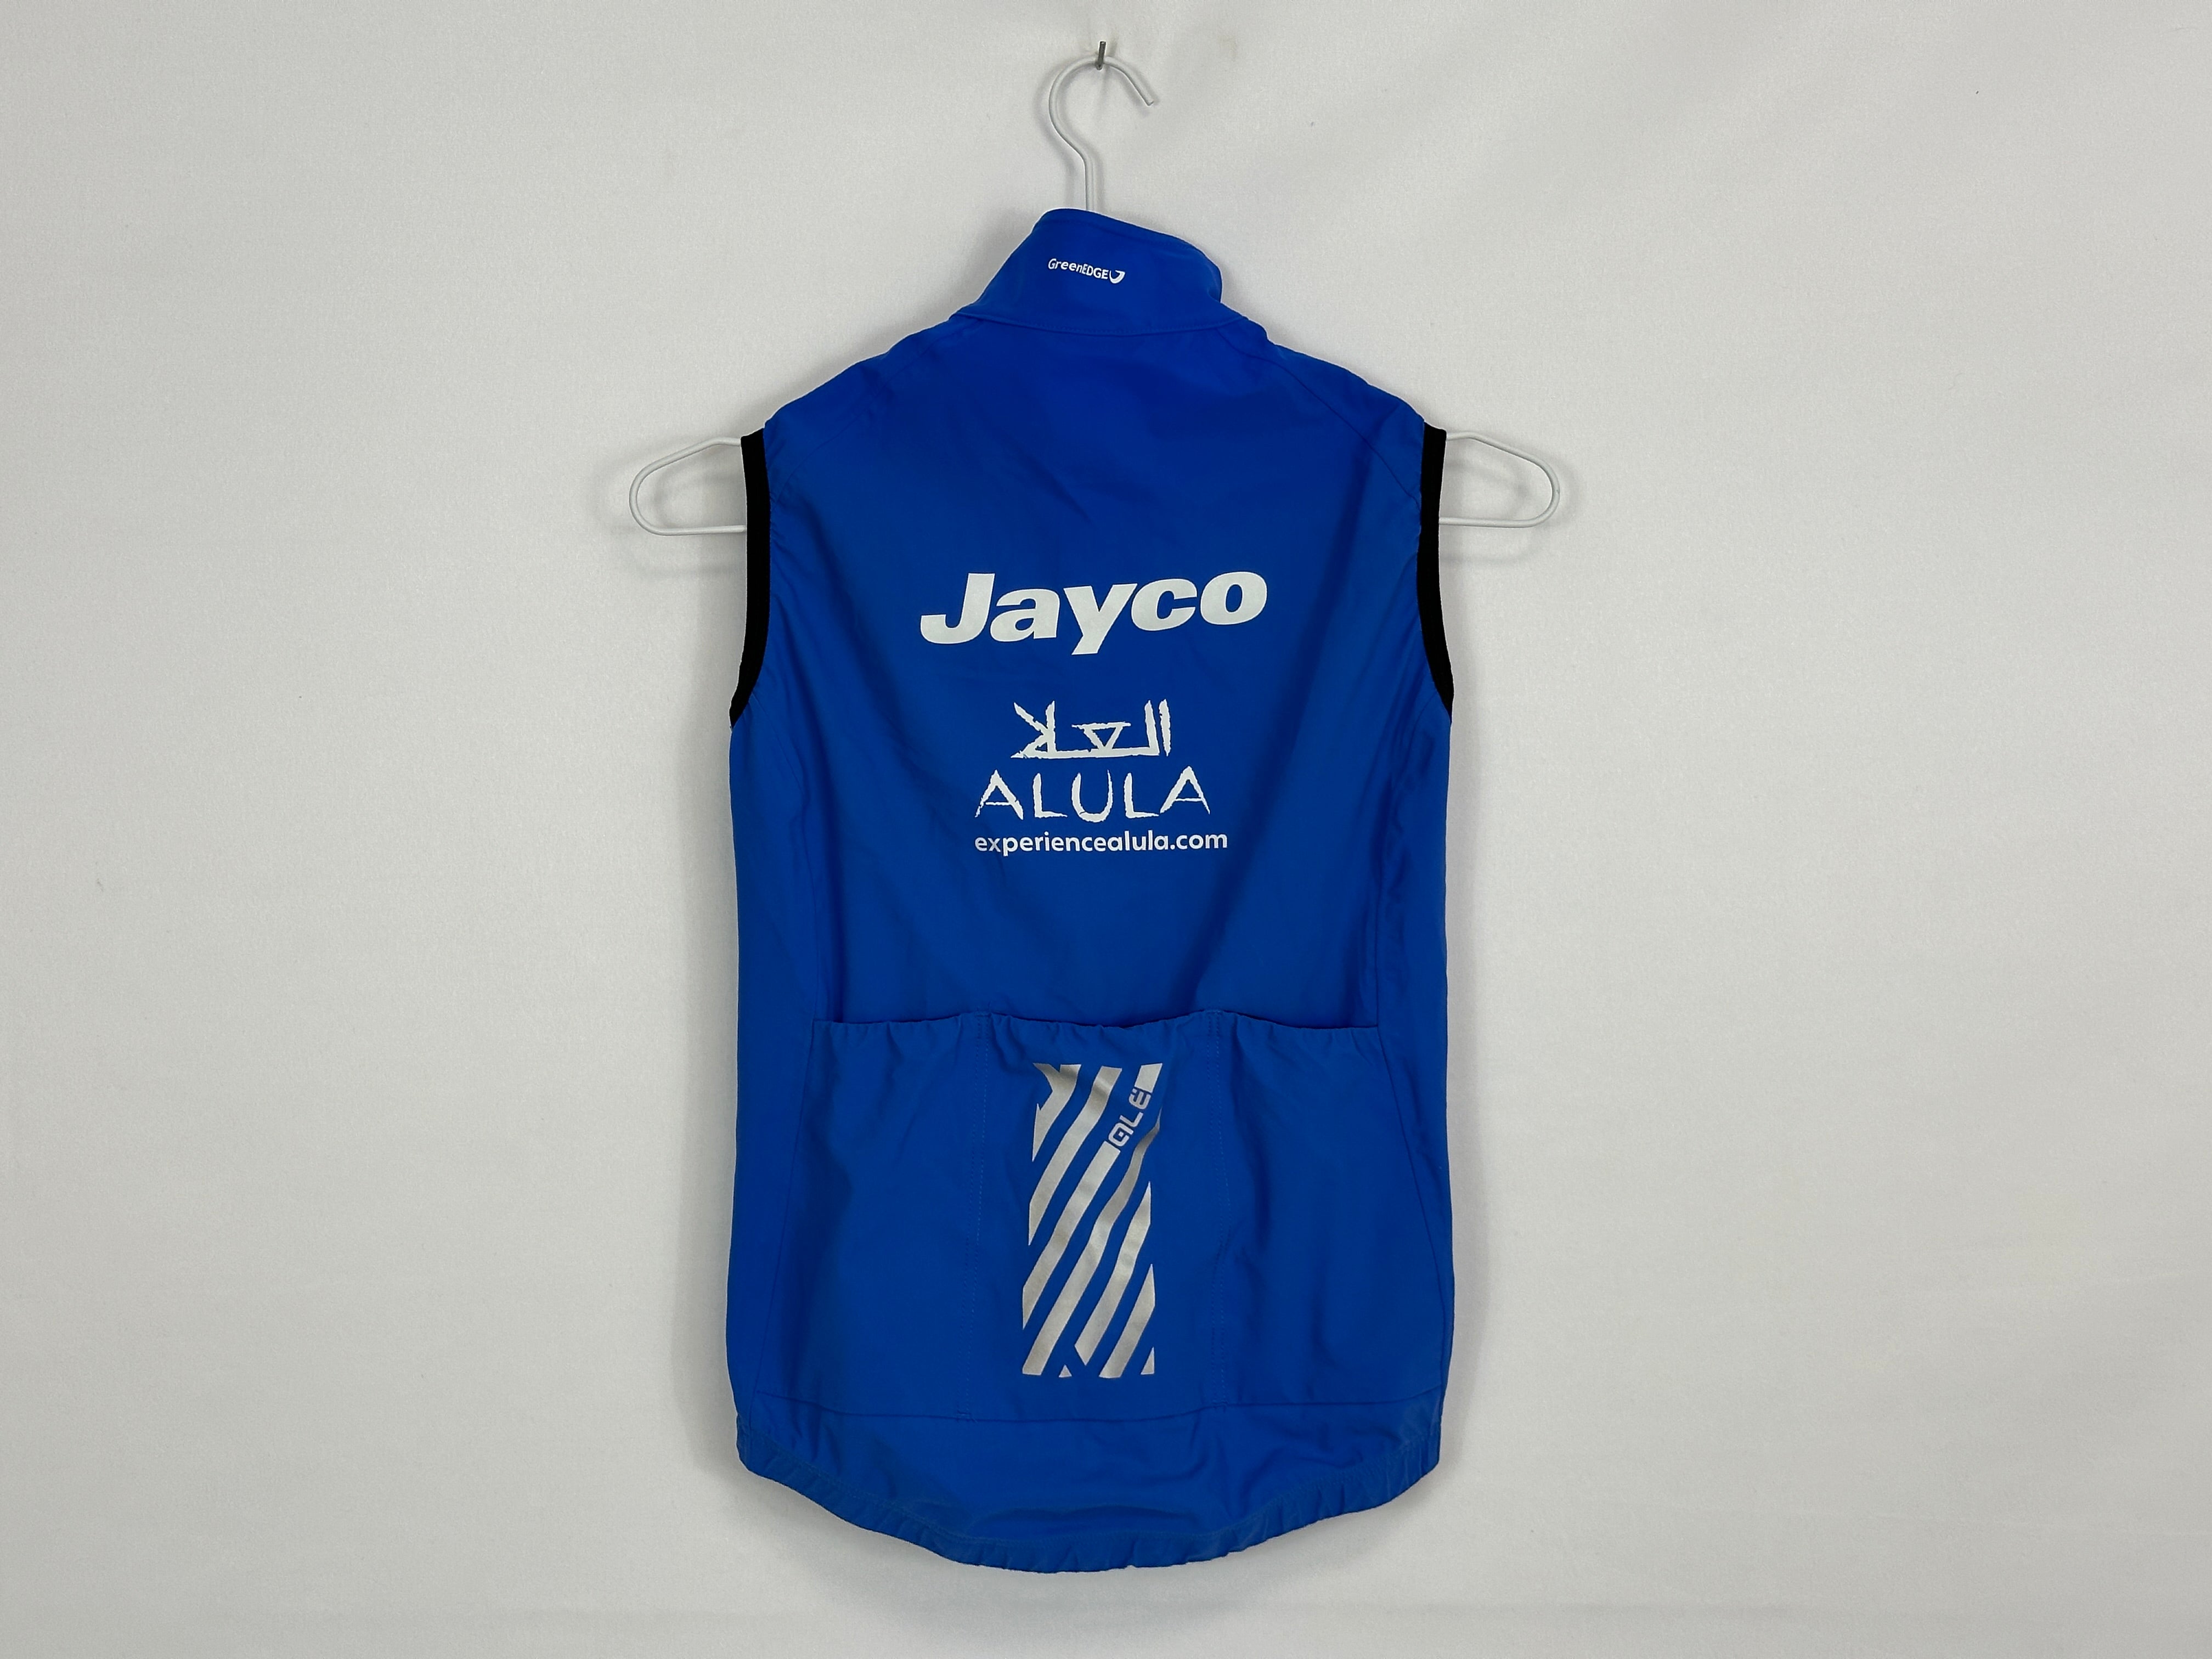 Team Jayco Alula - Ultralight Rain Vest by Ale